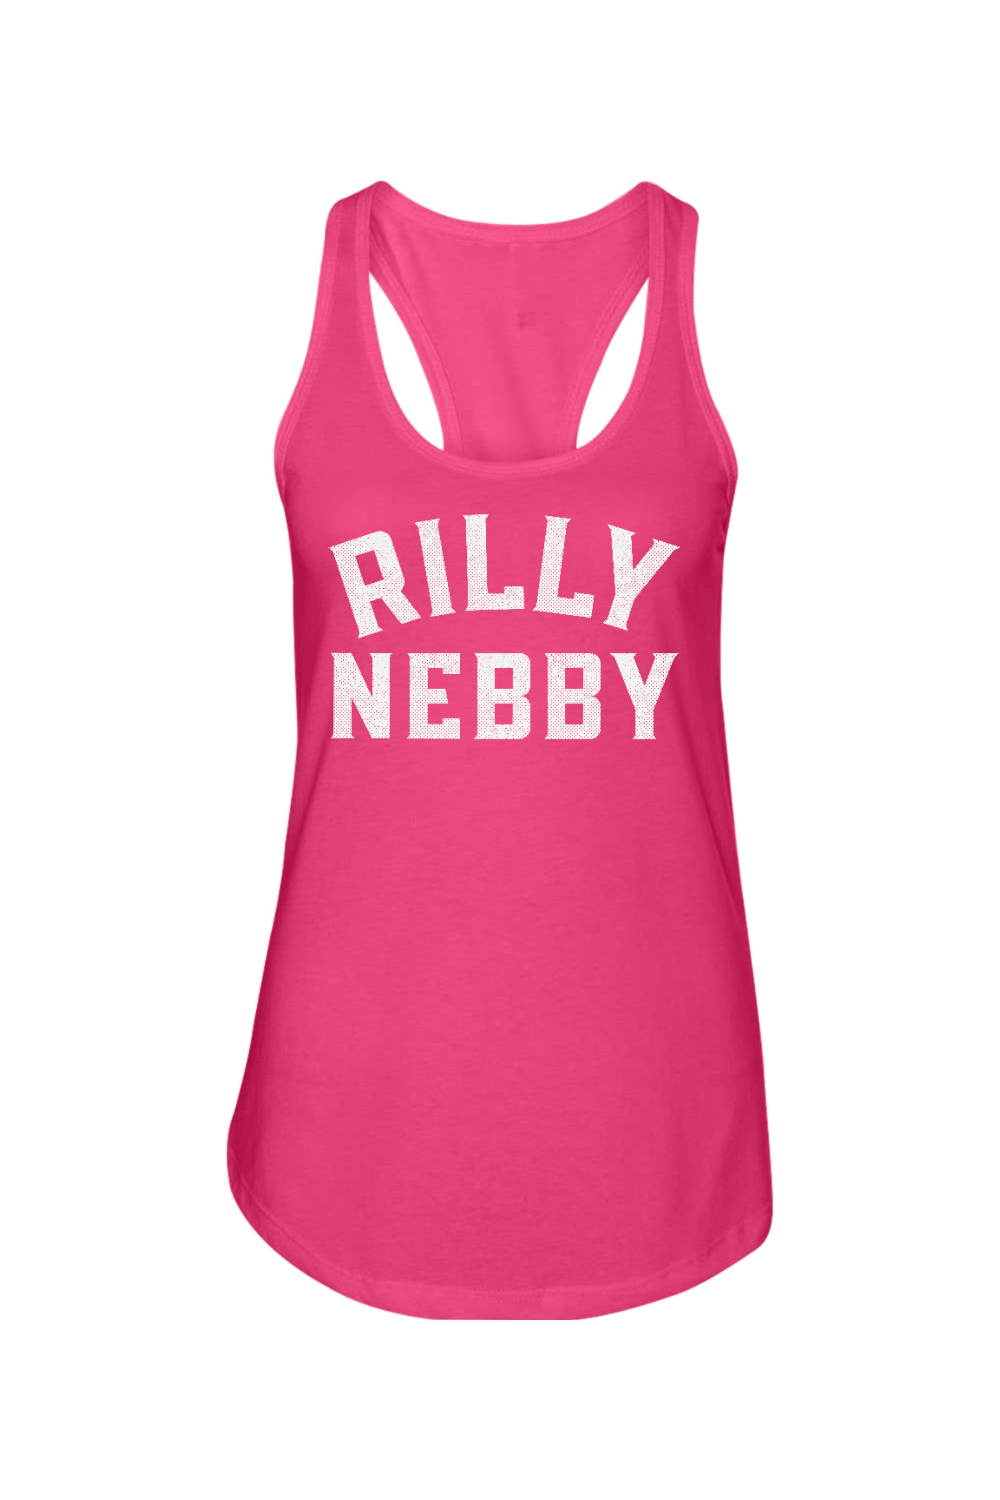 Rilly Nebby - Ladies Racerback Tank - Yinzylvania